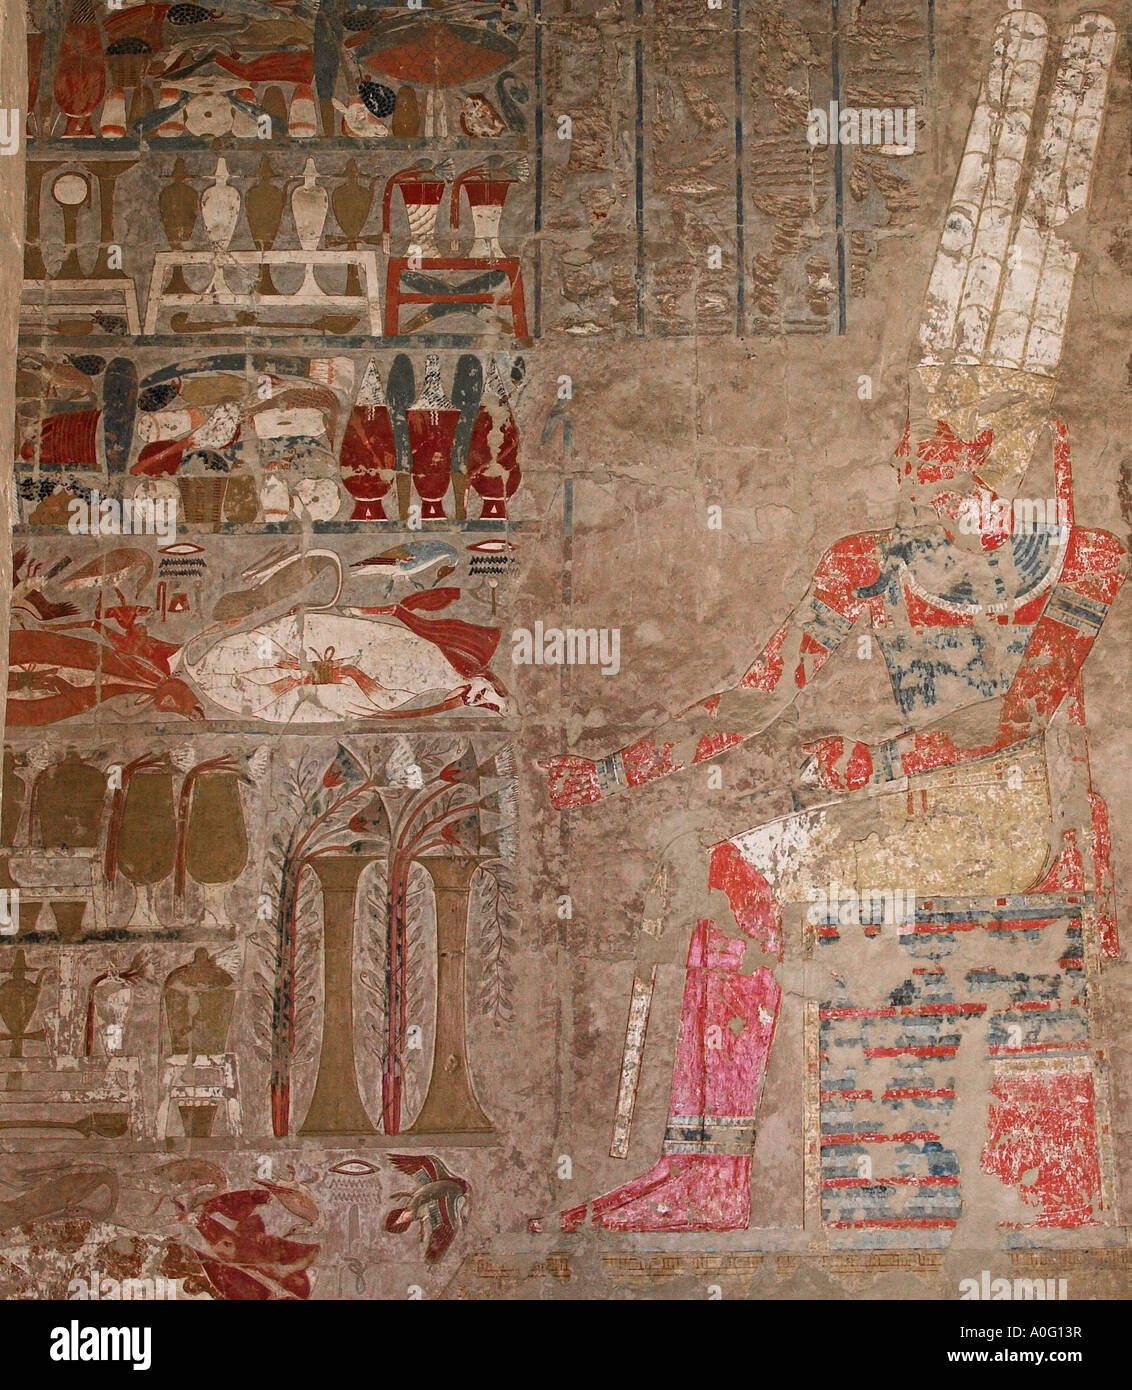 Amun re King of the Gods Deir El Bahri Egypt Stock Photo